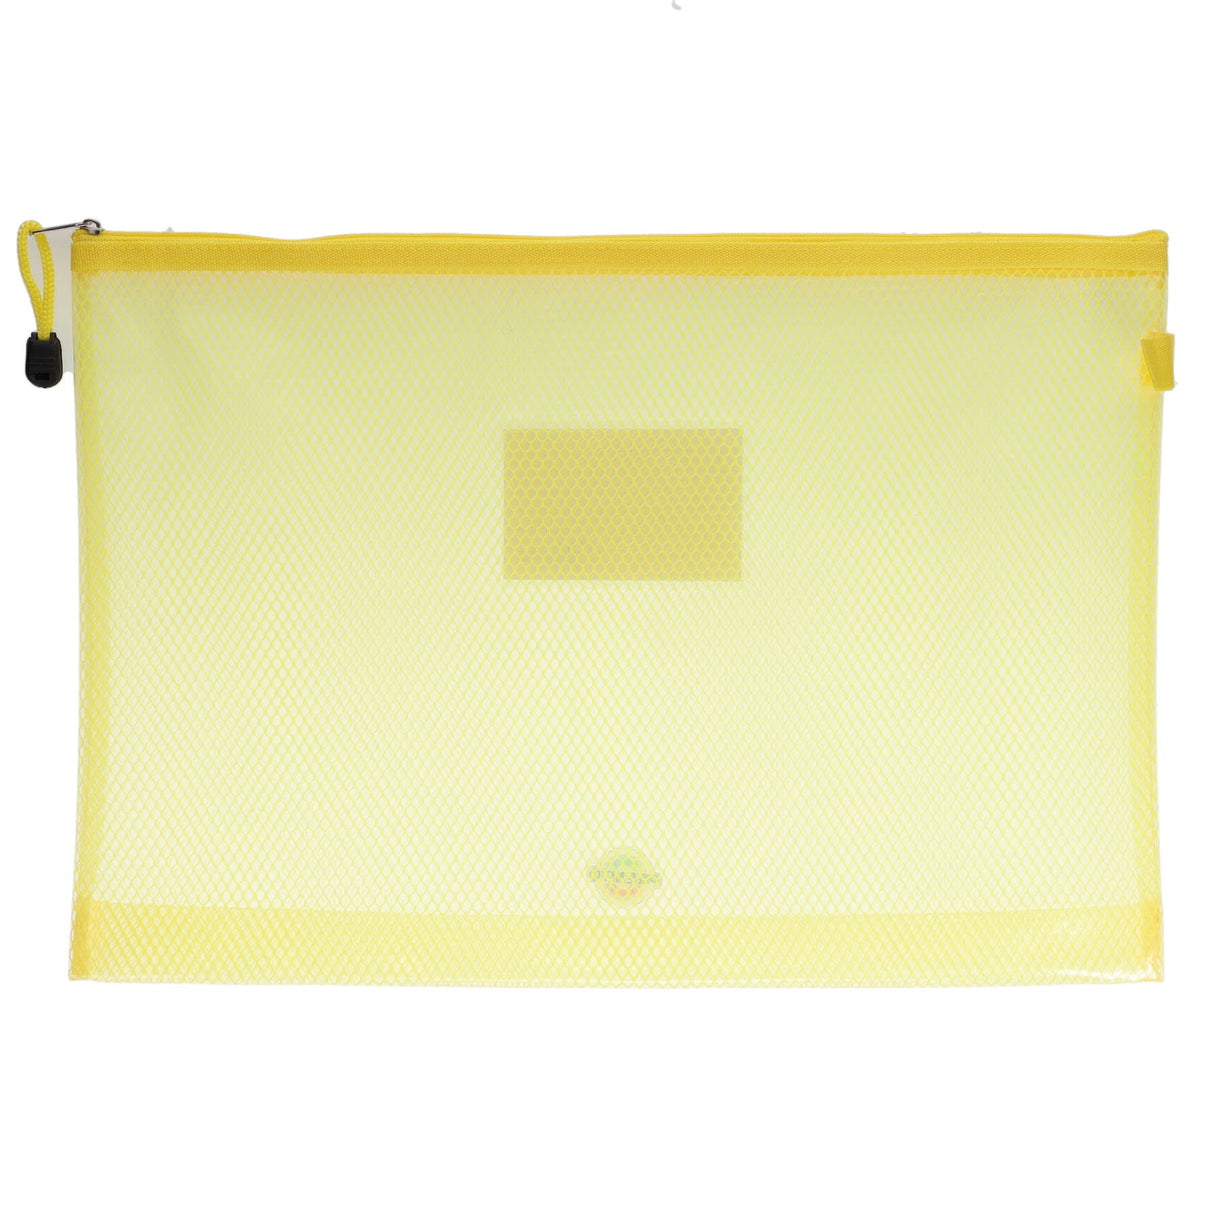 Premto B4+ Ultramesh Expanding Wallet with Zip - Sunshine Yellow-Mesh Wallet Bags-Premto|StationeryShop.co.uk